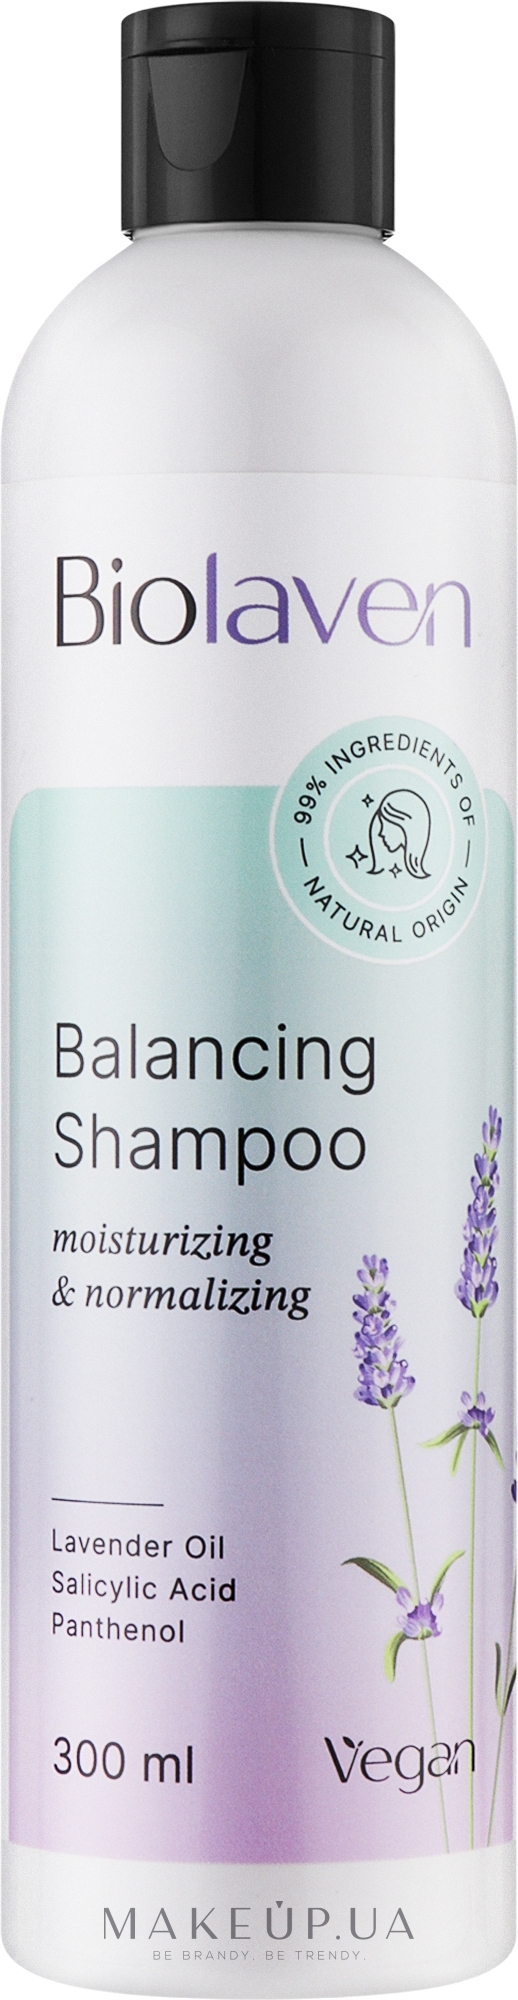 Балансувальний шампунь для волосся - Biolaven Balancing Shampoo — фото 300ml